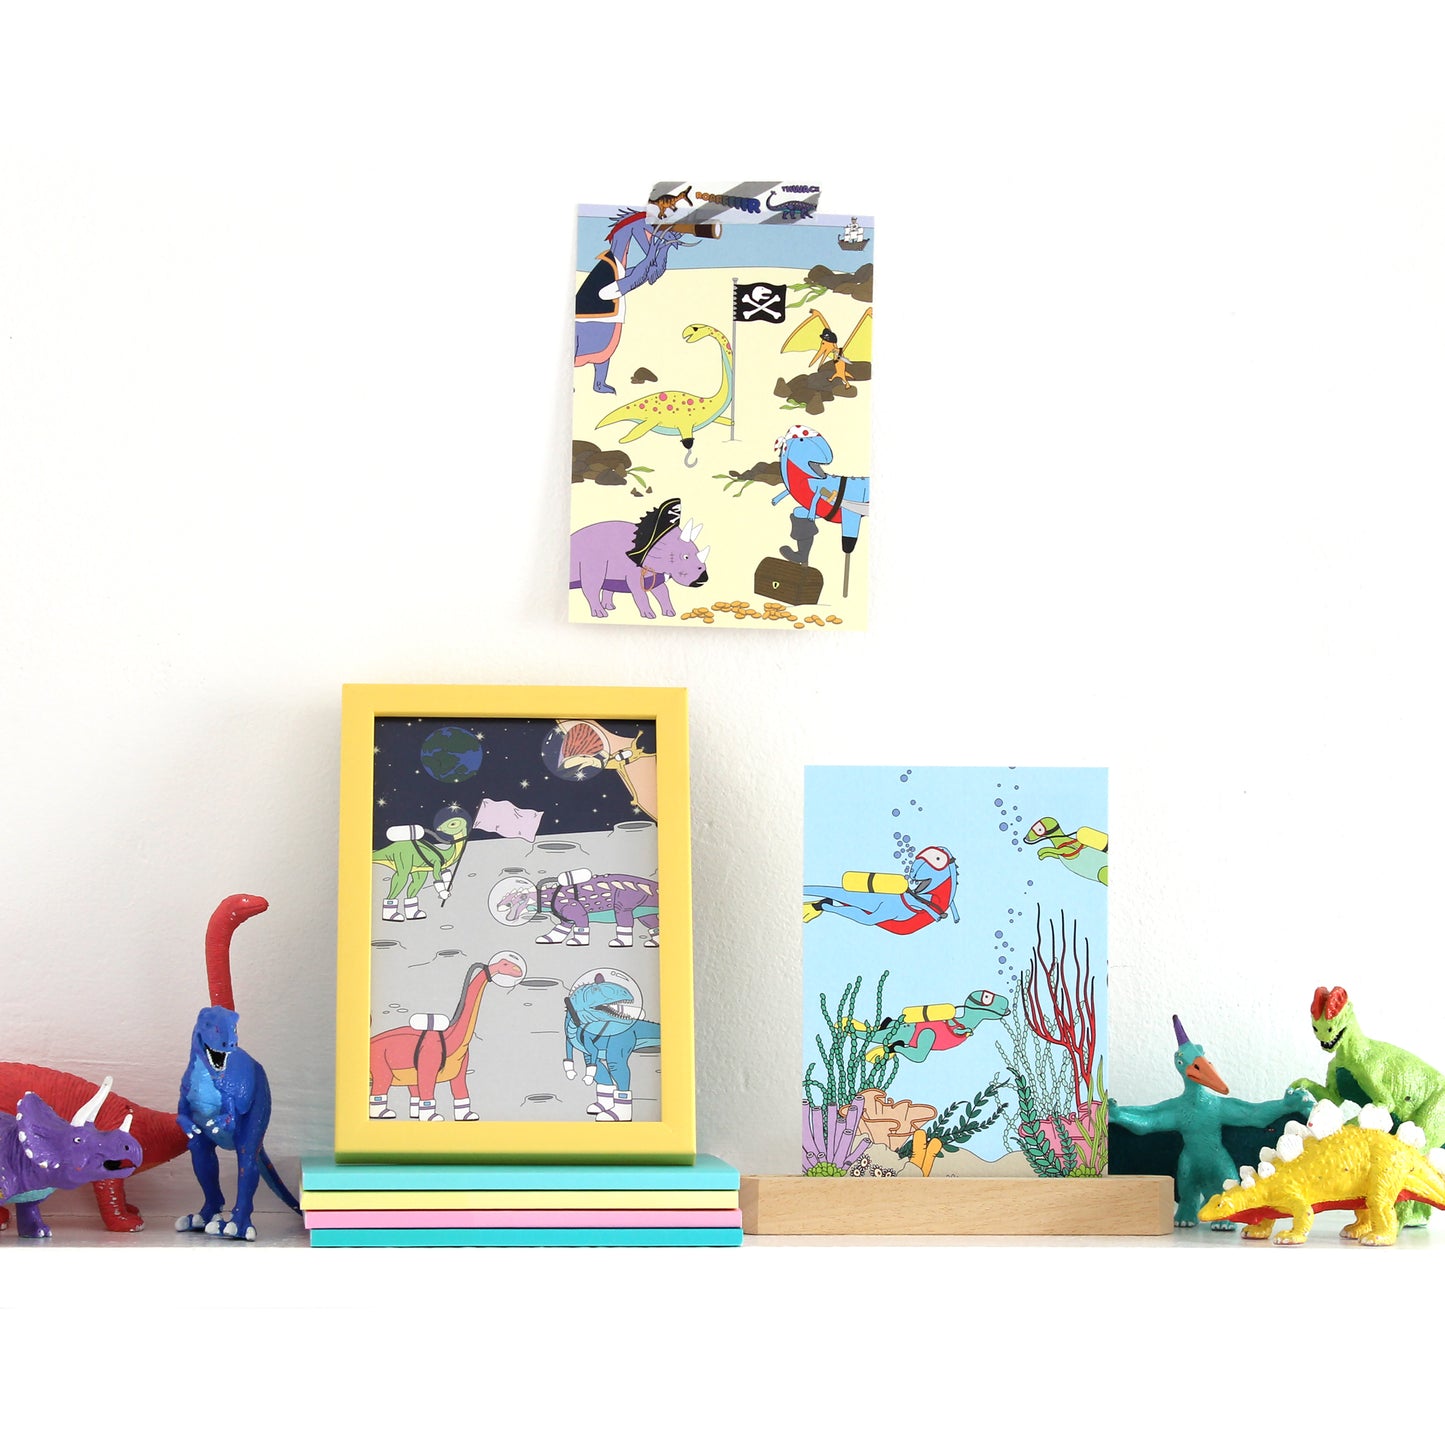 3 dinosaur postcards on a shelf with dinosaur figurines